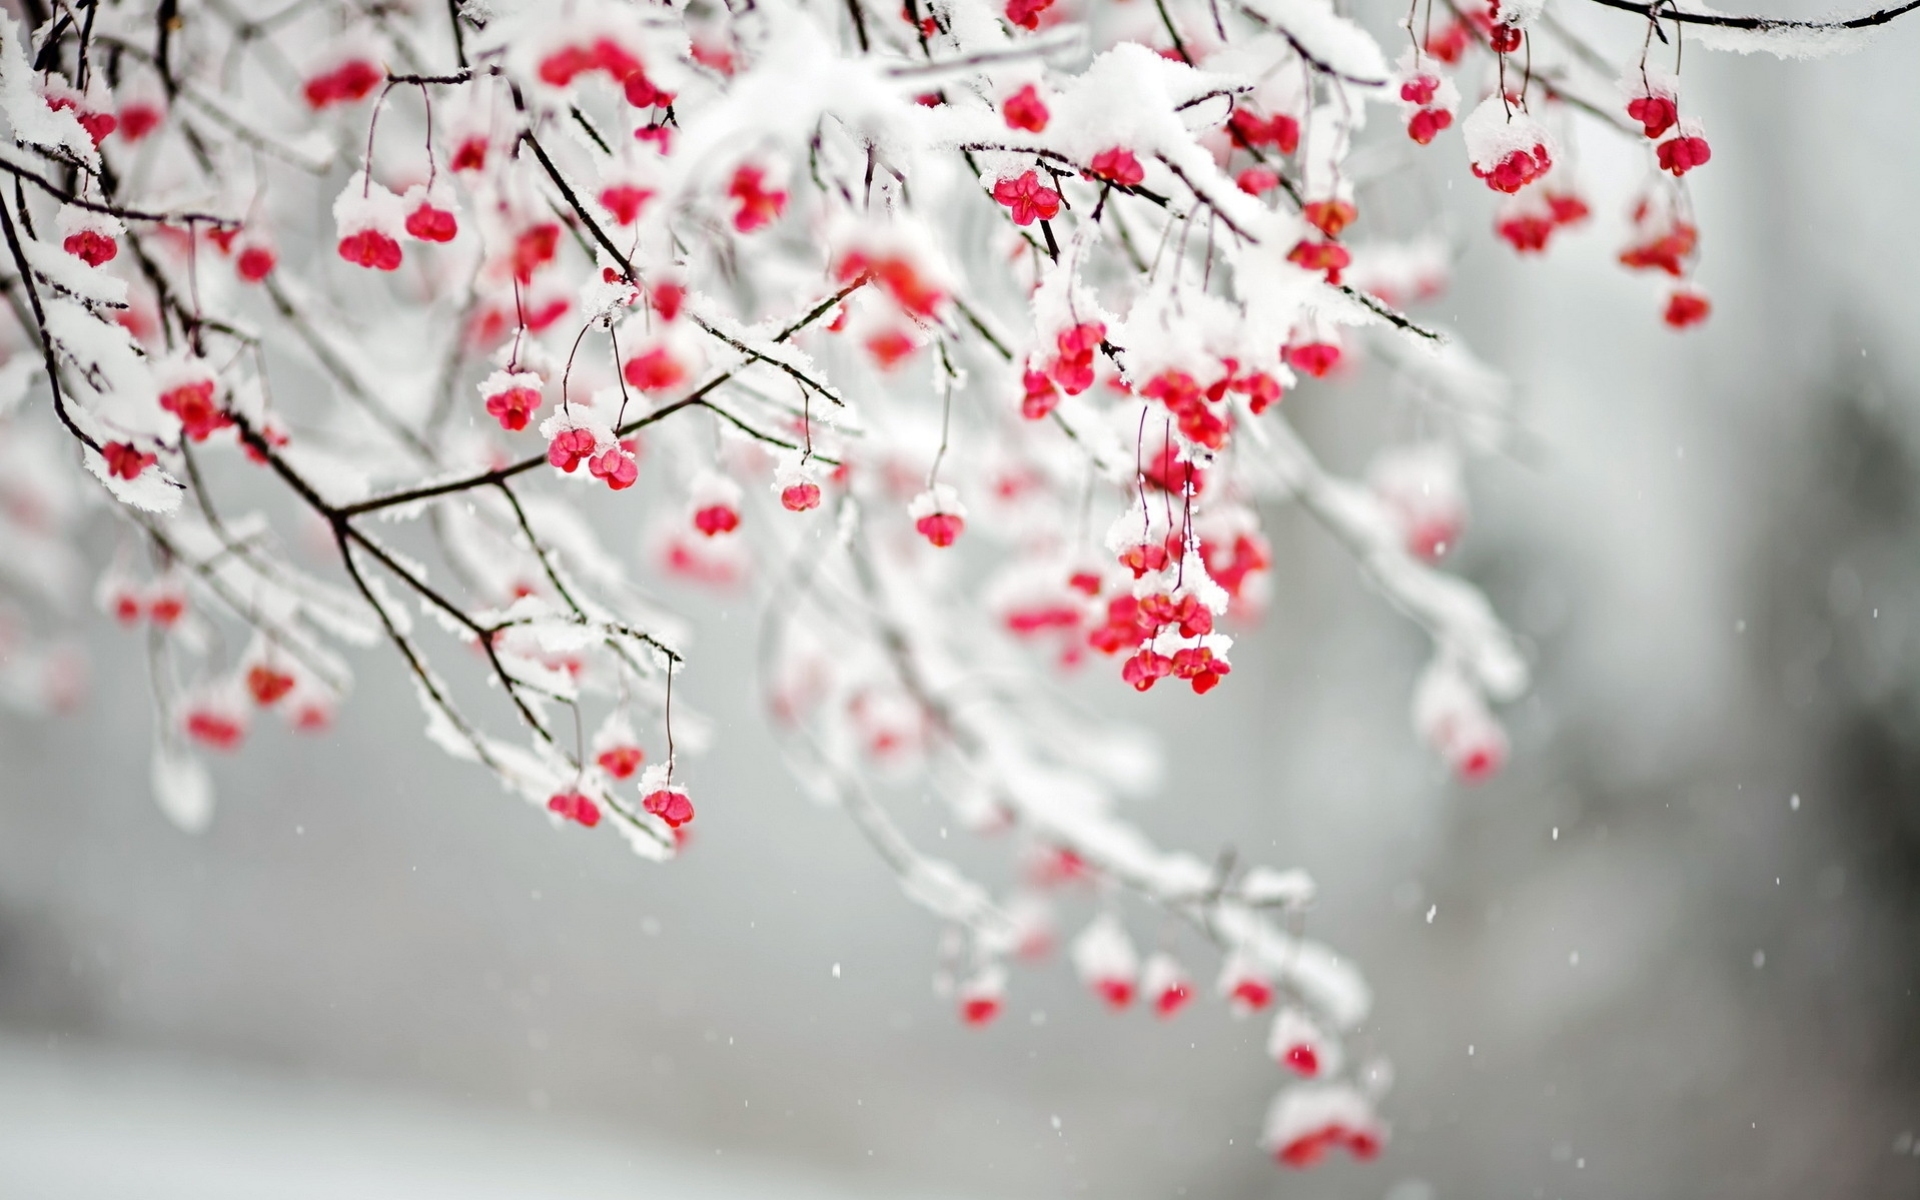 Winter Flowers - Wallpaper, High Definition, High Quality, Widescreen